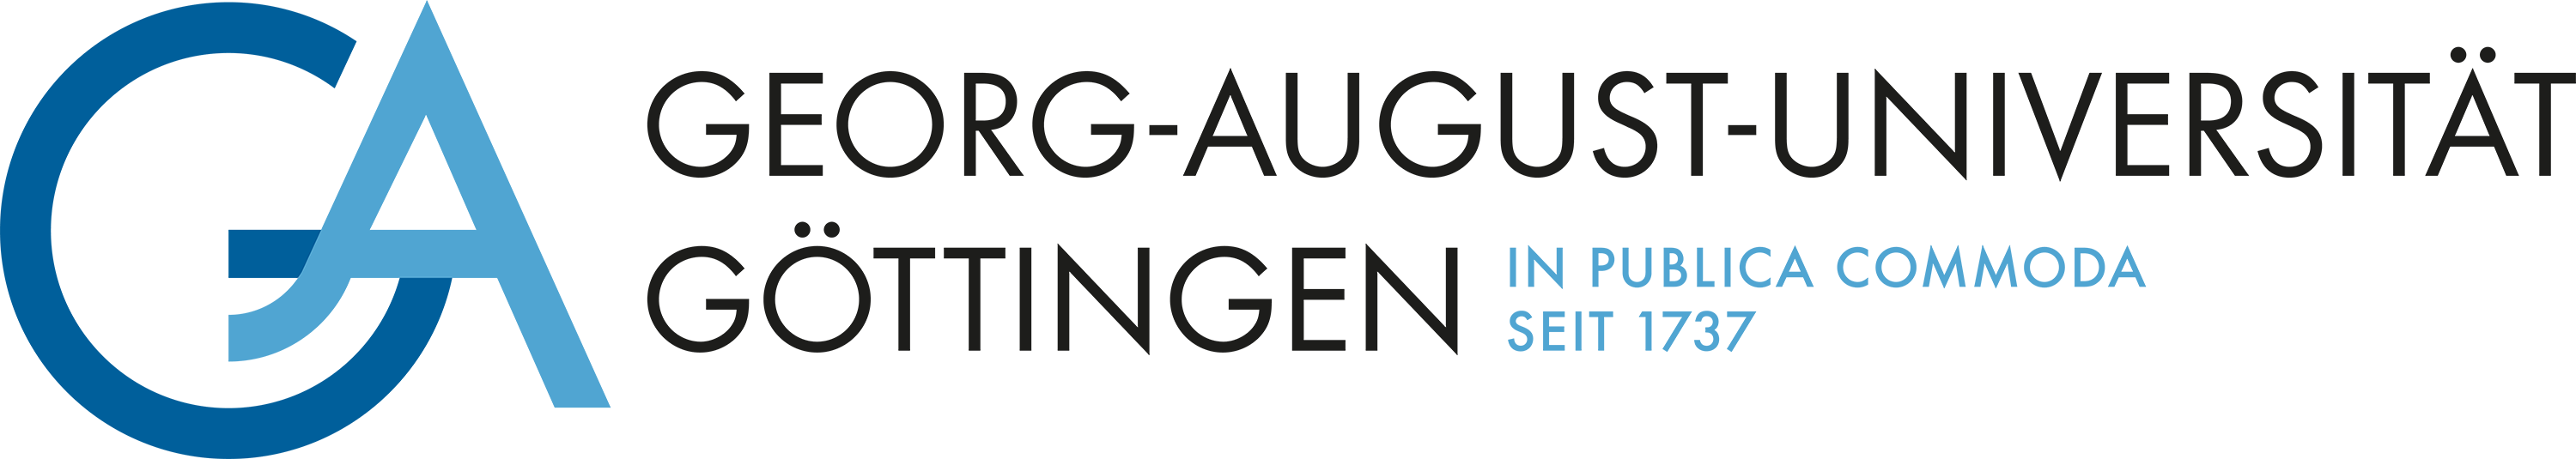 Logo Georg-August-Universität Göttingen